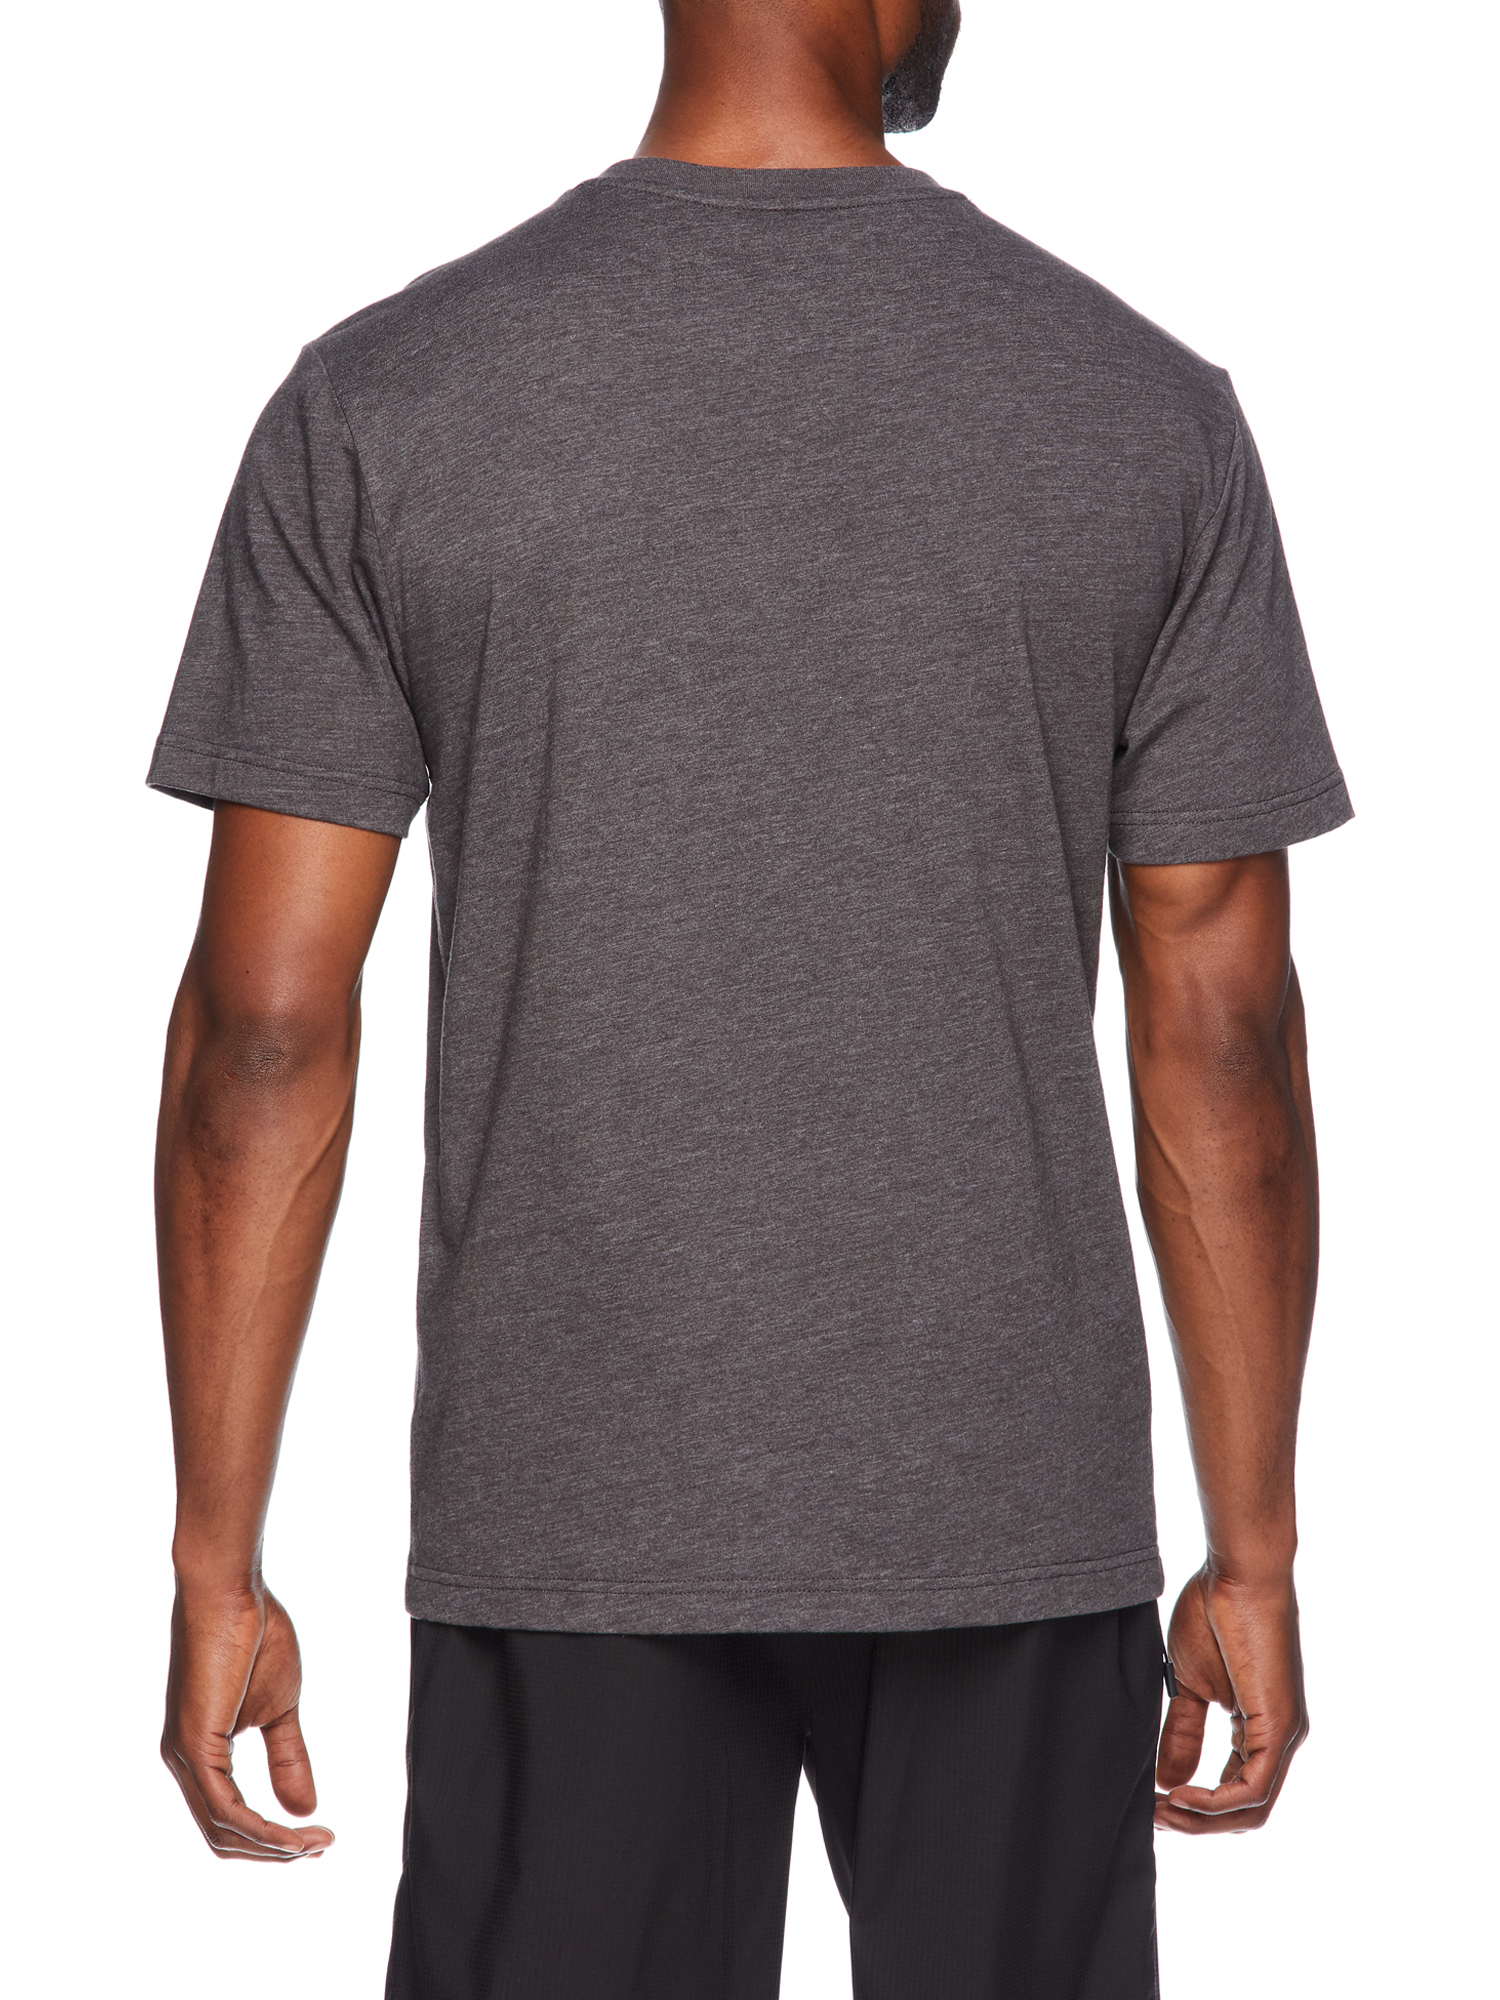 Reebok Men's Jolt 2.0 V-Neck Short Sleeve T-Shirt - image 2 of 4